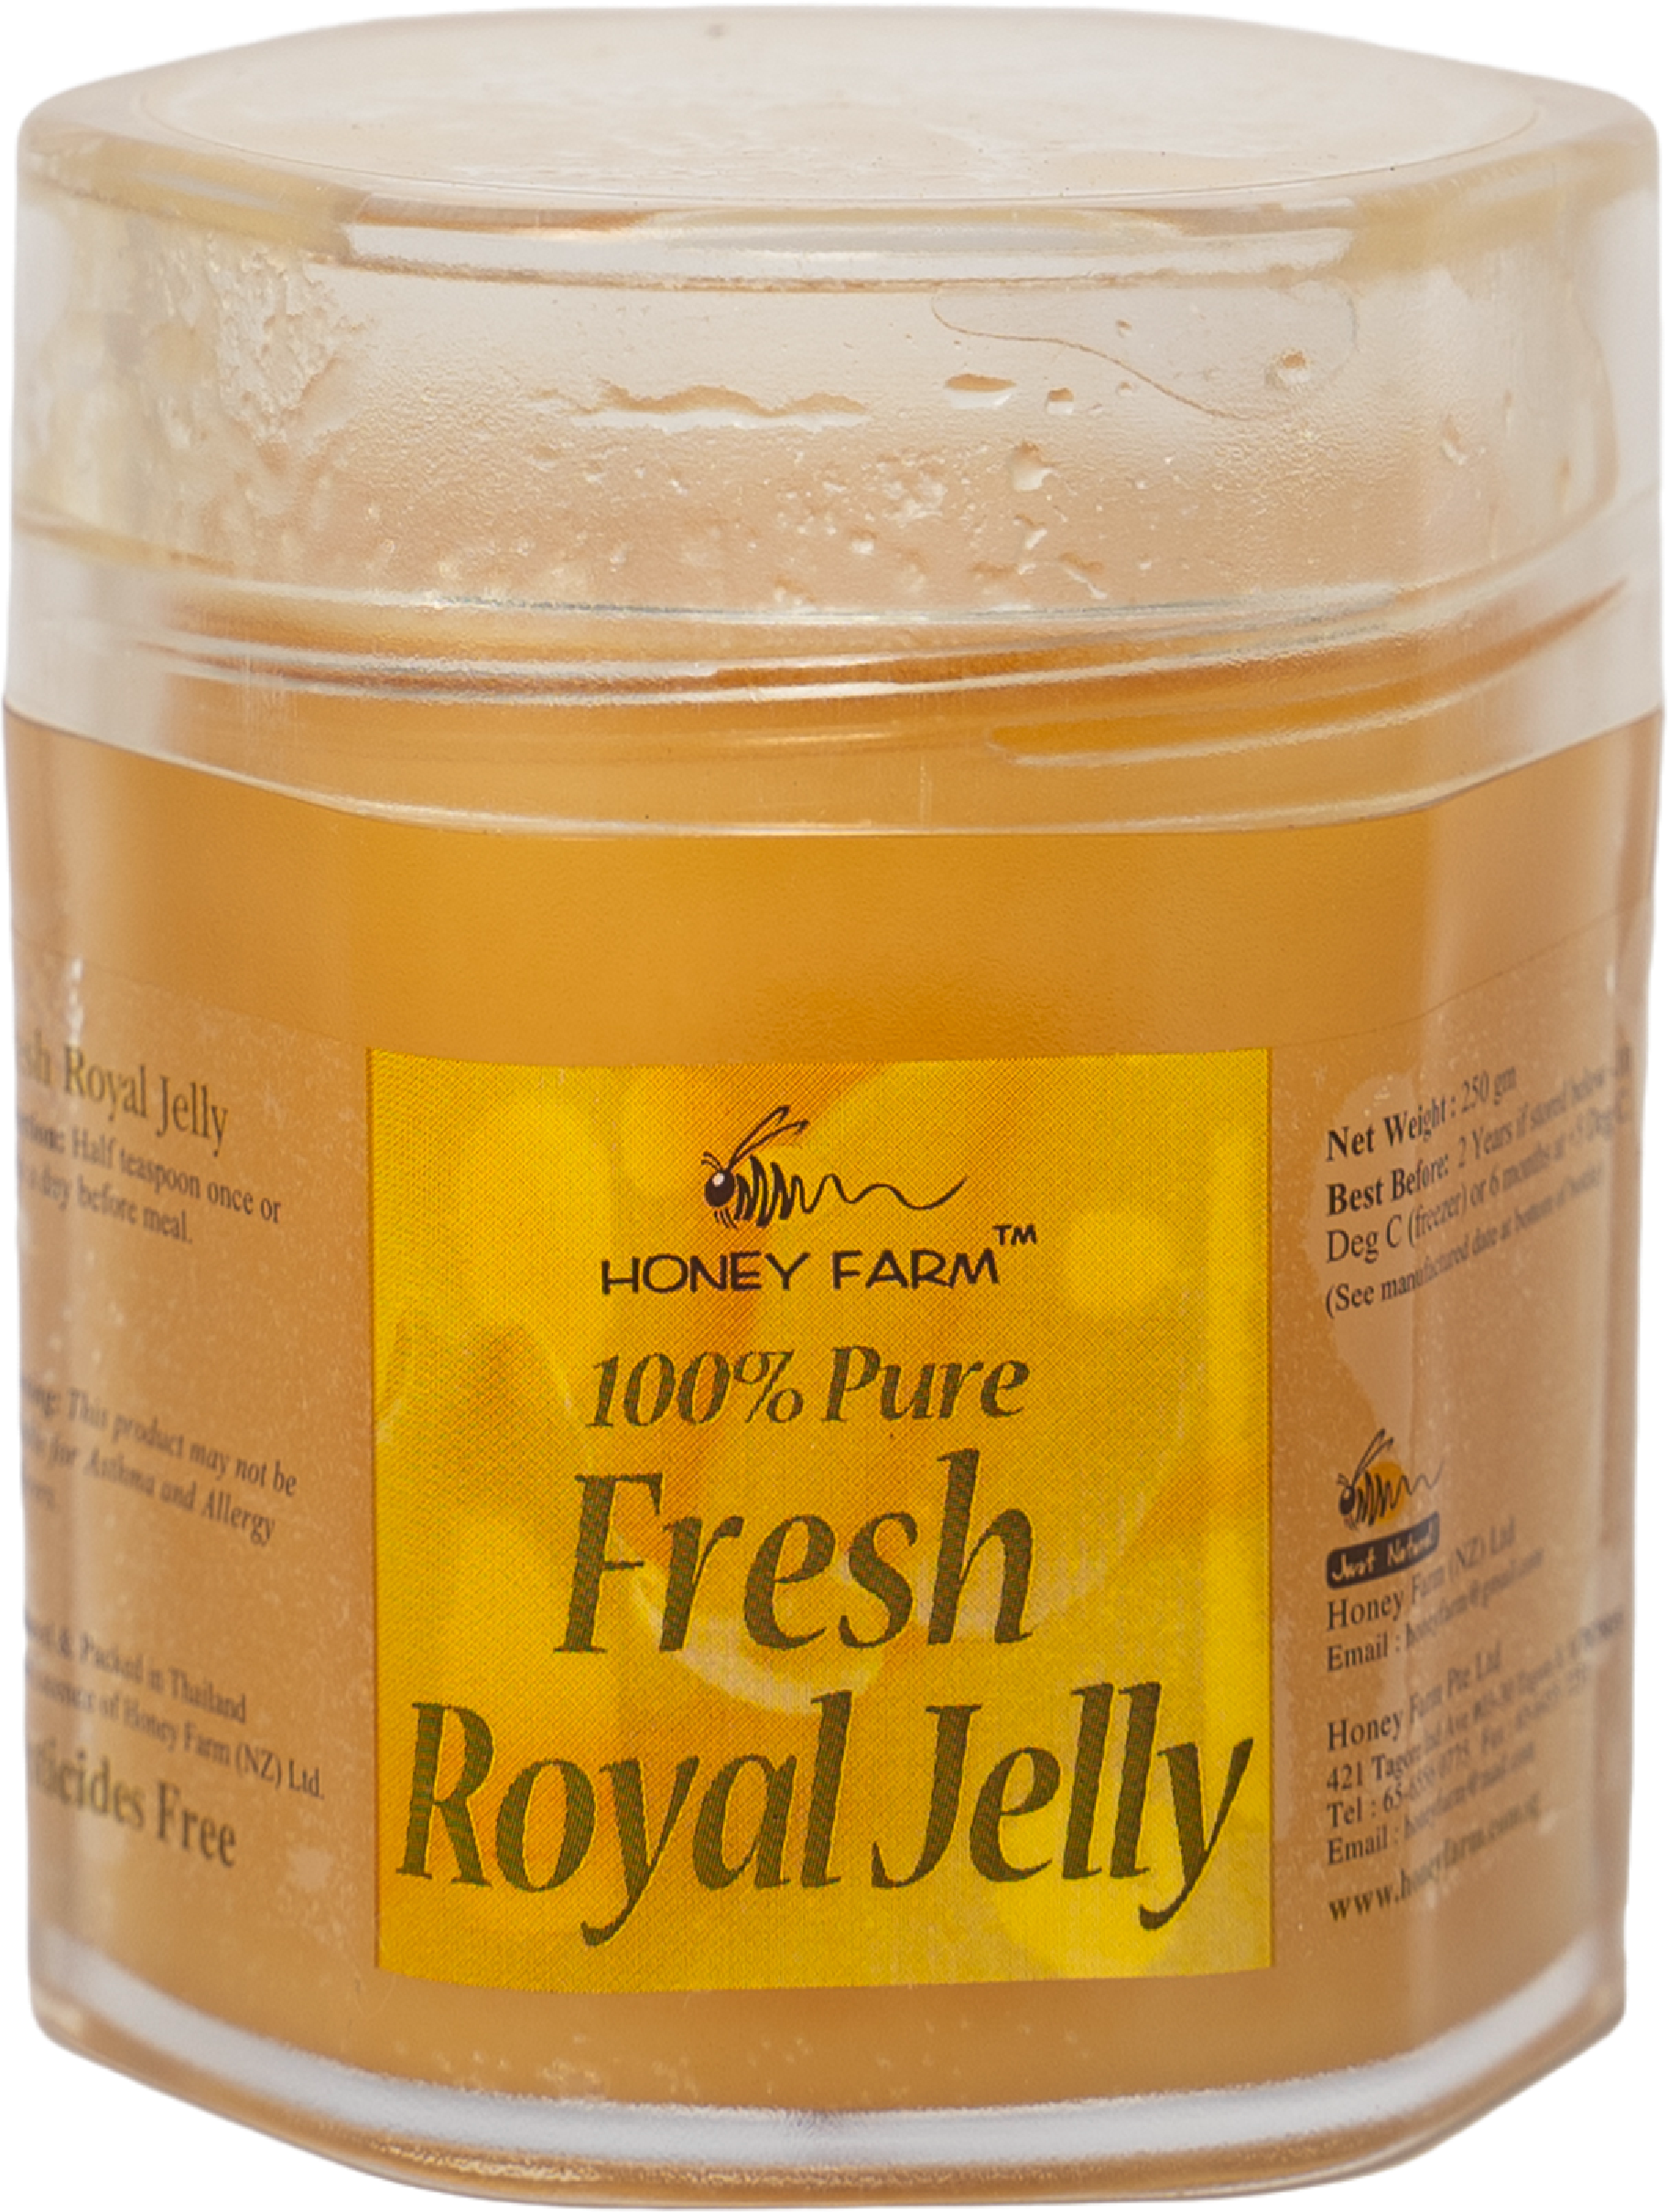 Fresh Royal Jelly